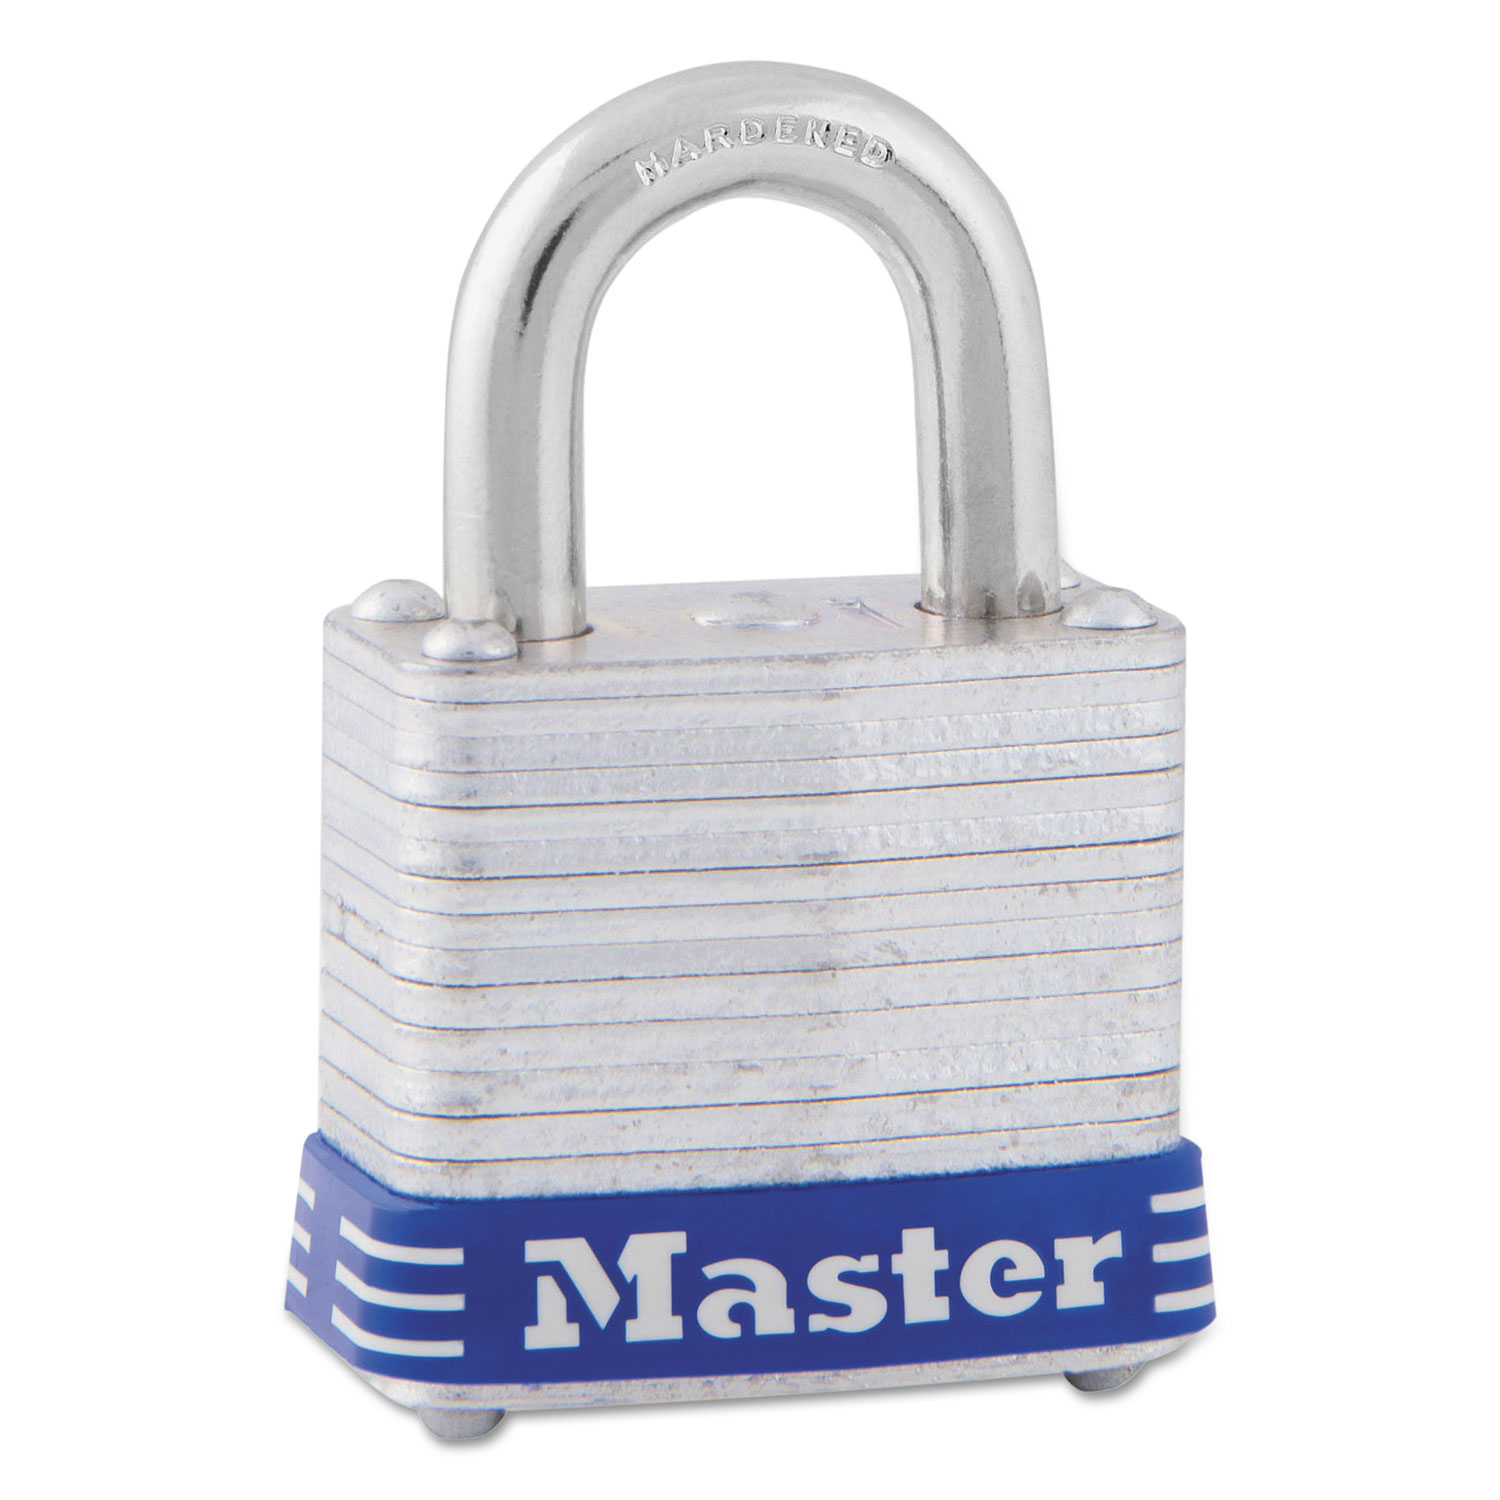  Master Lock 7D Four-Pin Tumbler Lock, Laminated Steel Body, 1 1/8 Wide, Silver/Blue, Two Keys (MLK7D) 